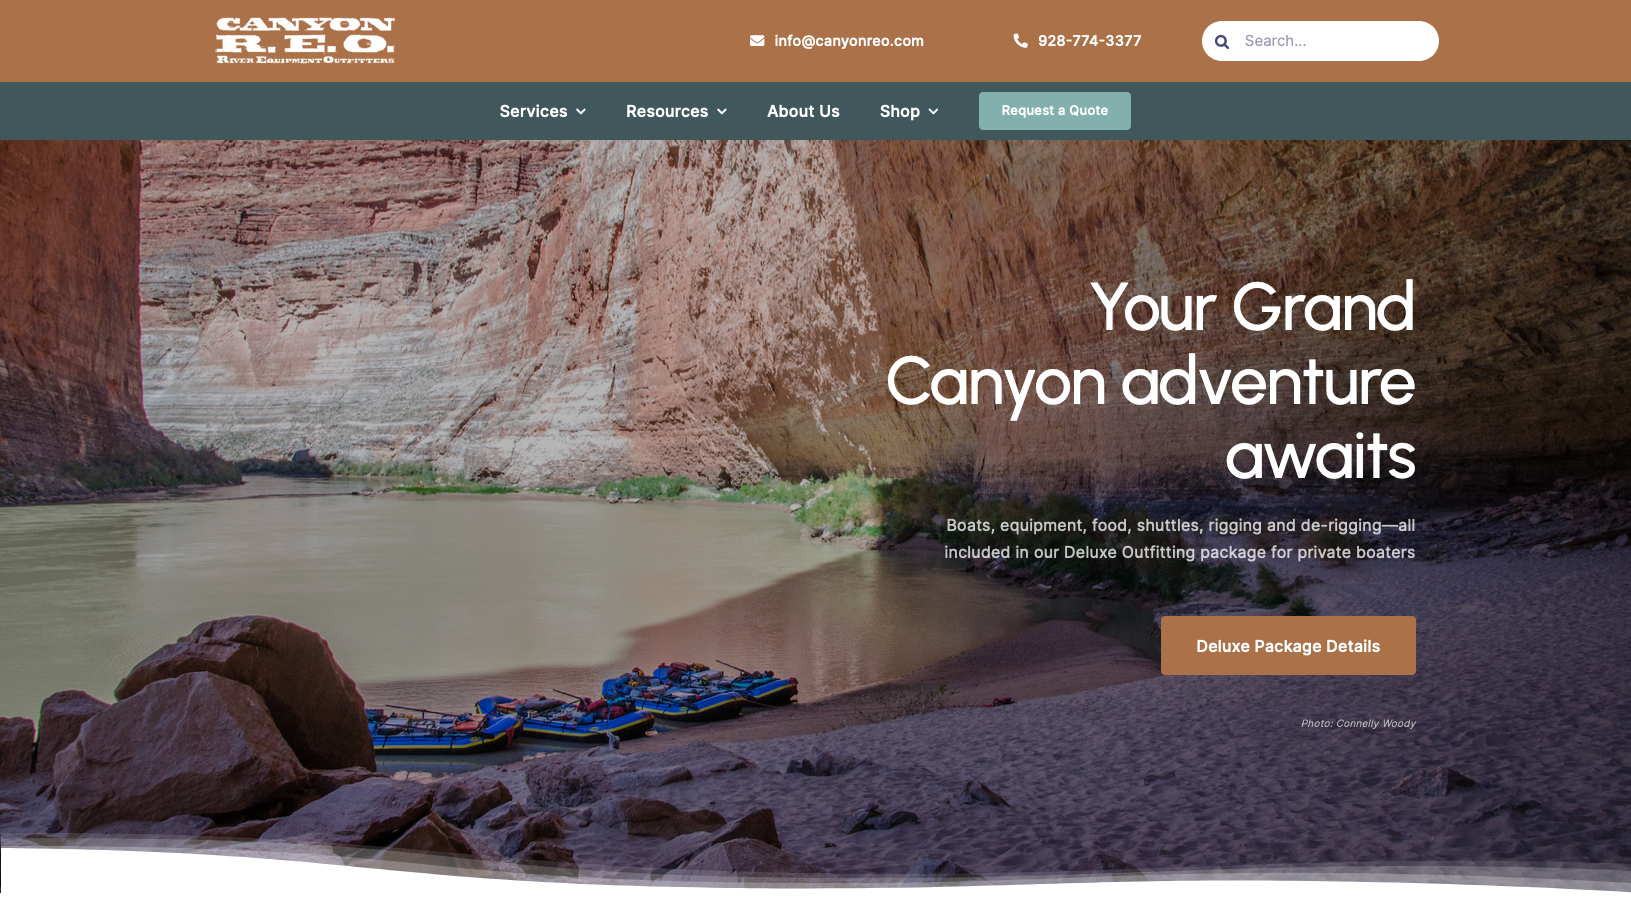 Canyon REO website screenshot